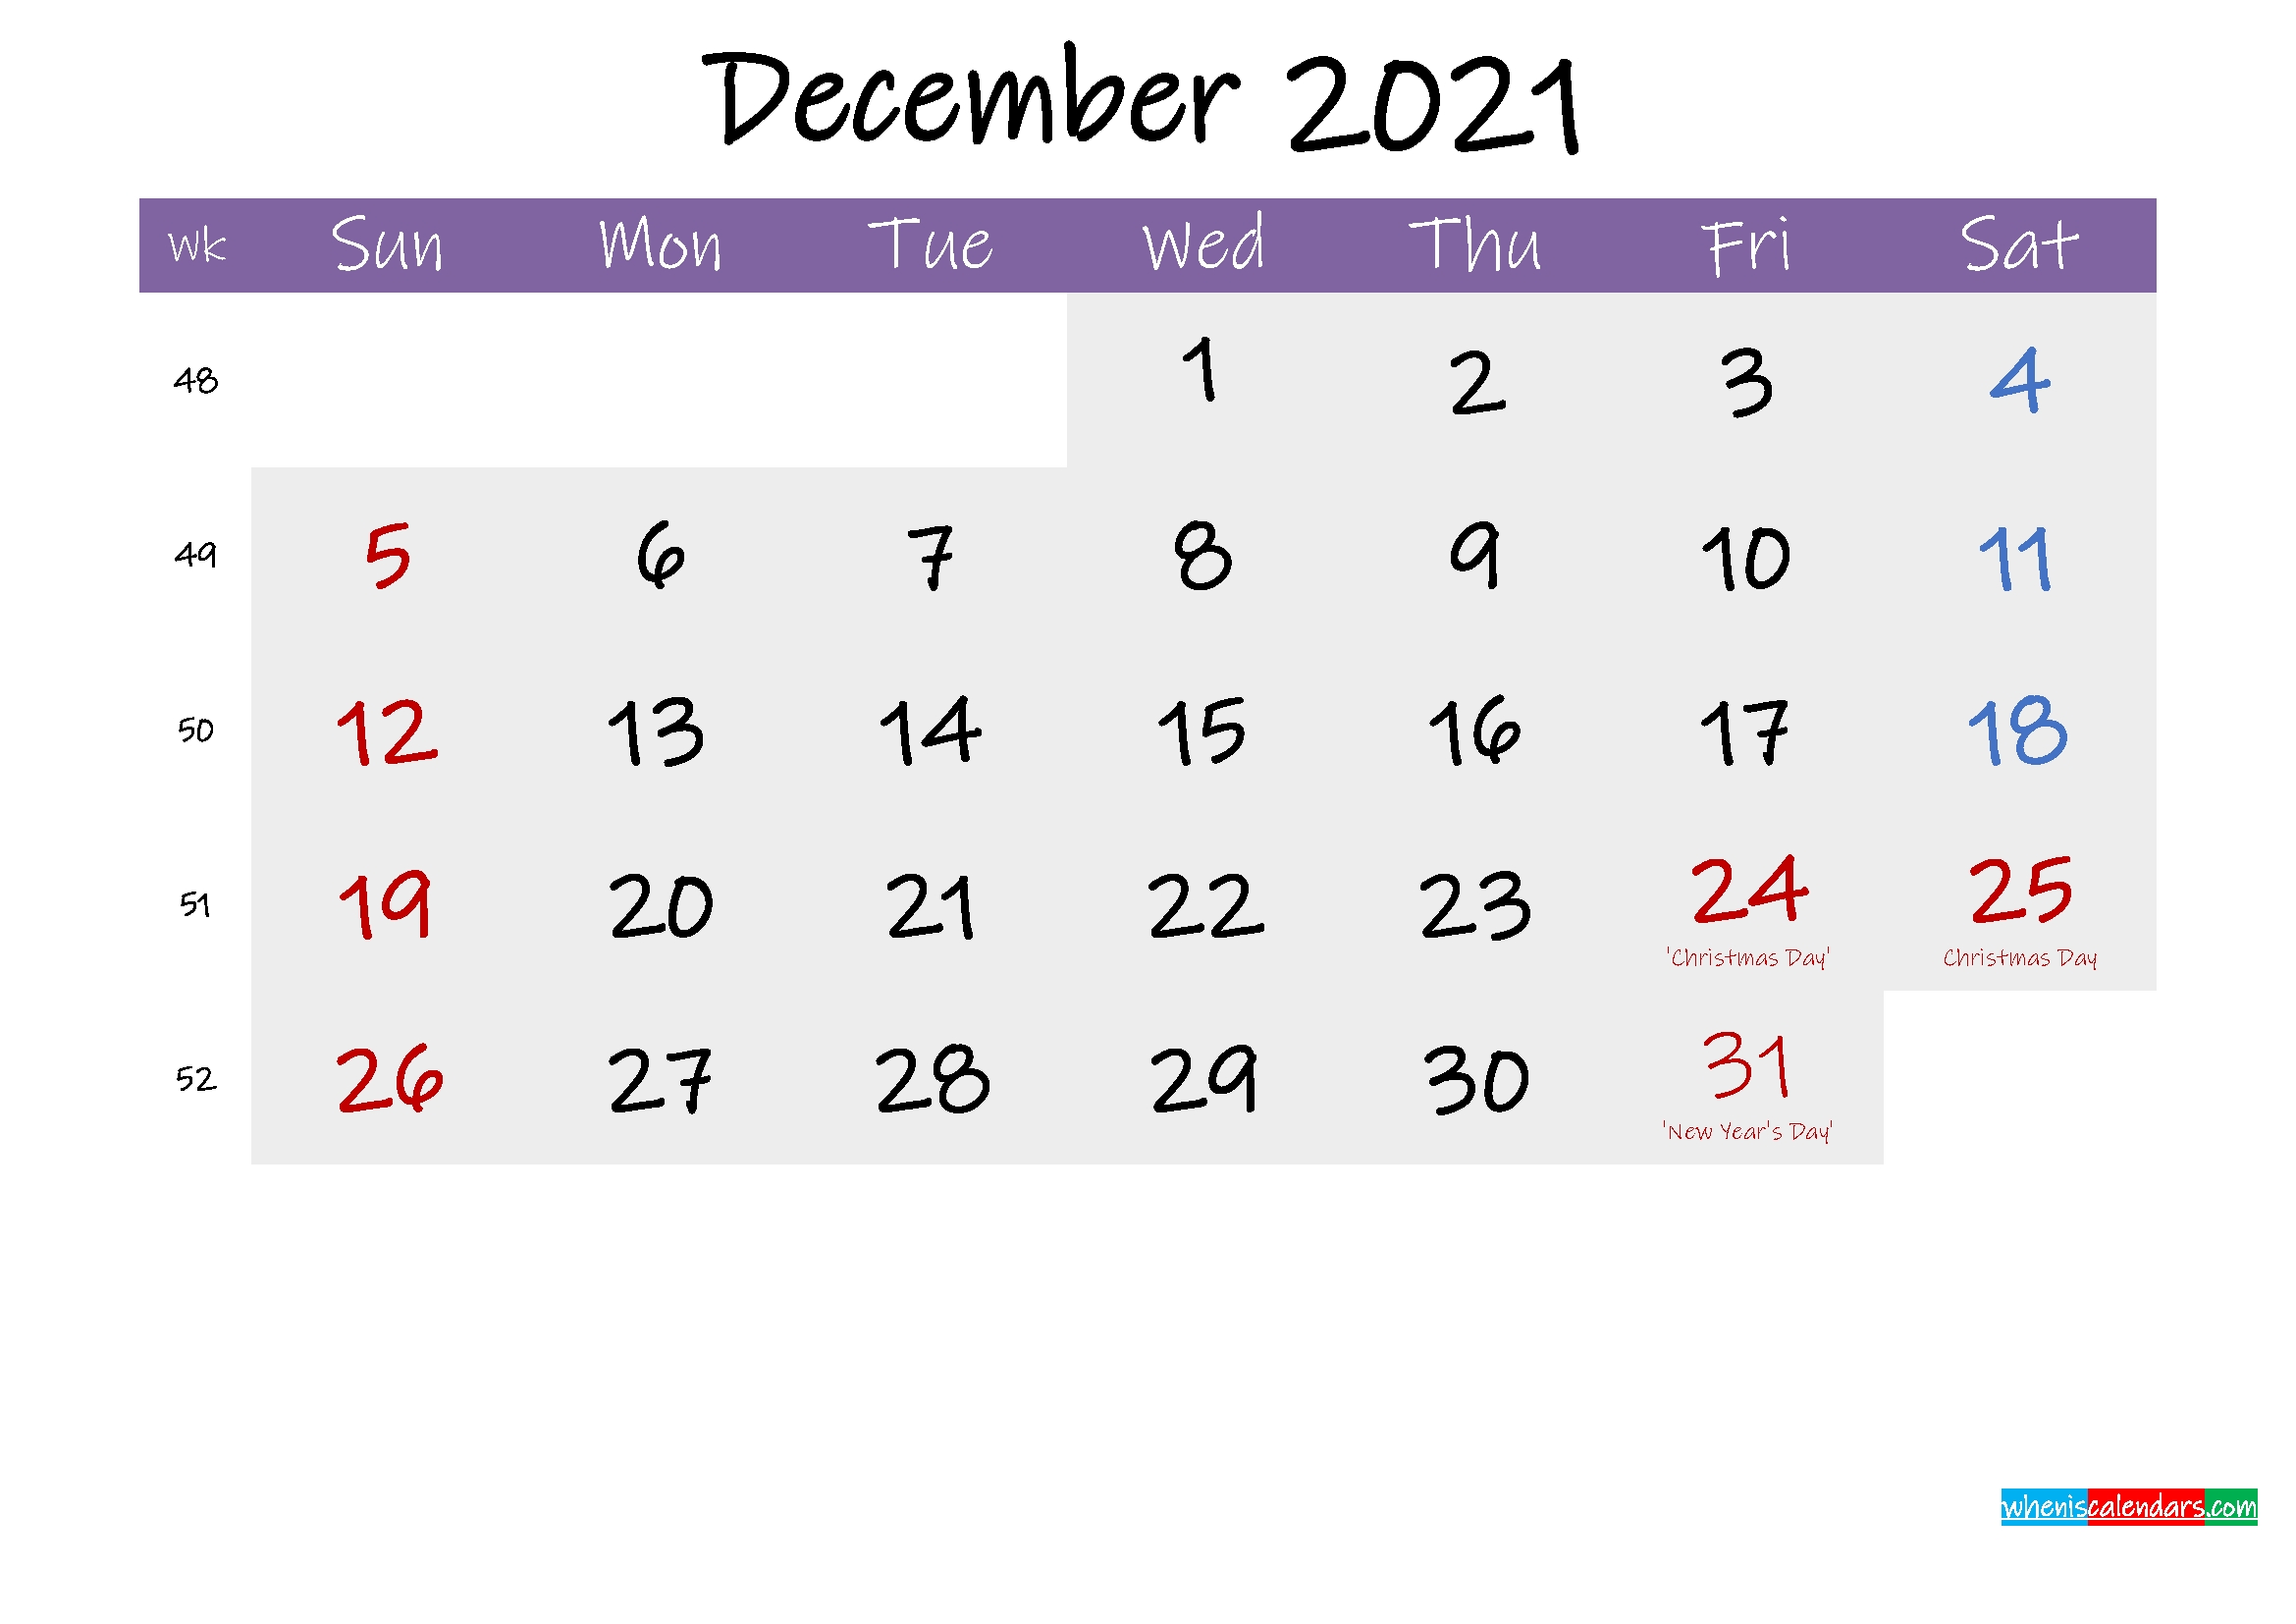 Get 2021 Calendar To Writ On